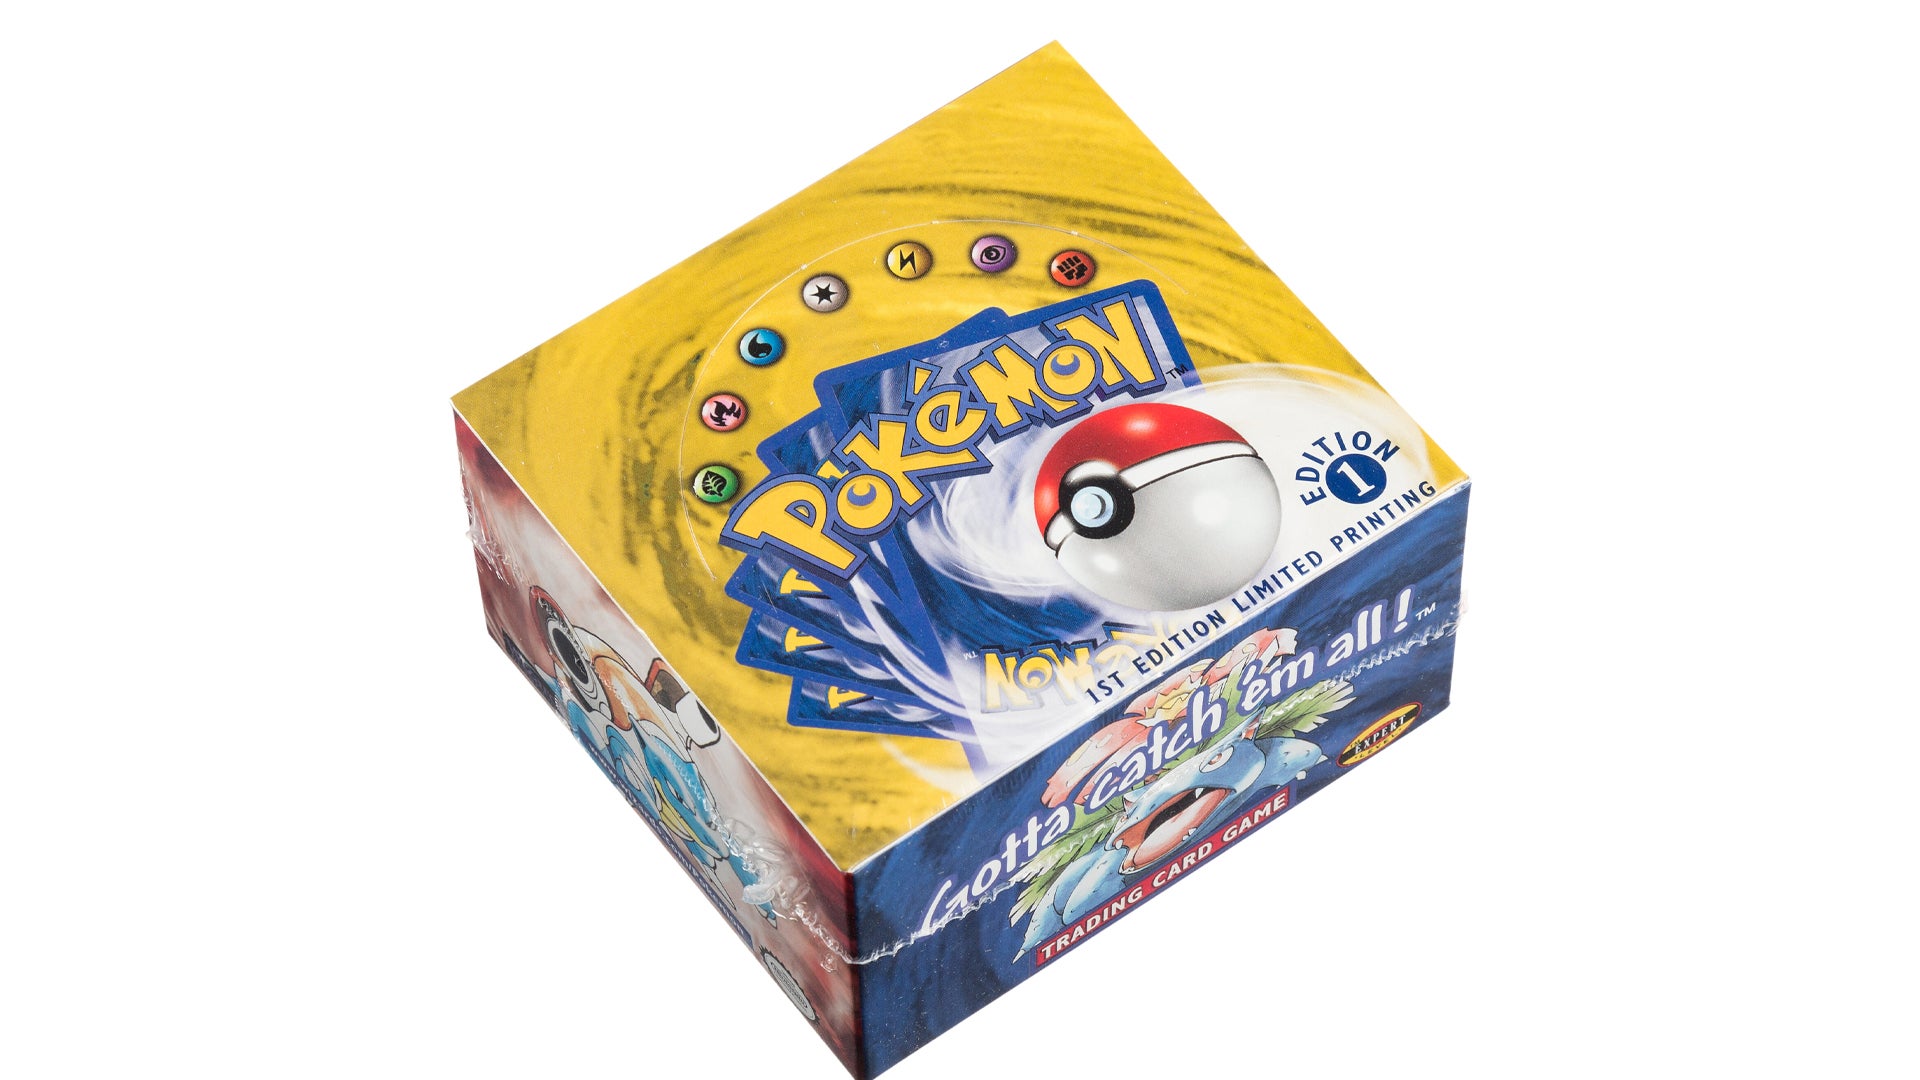 Pokémon trading card booster box